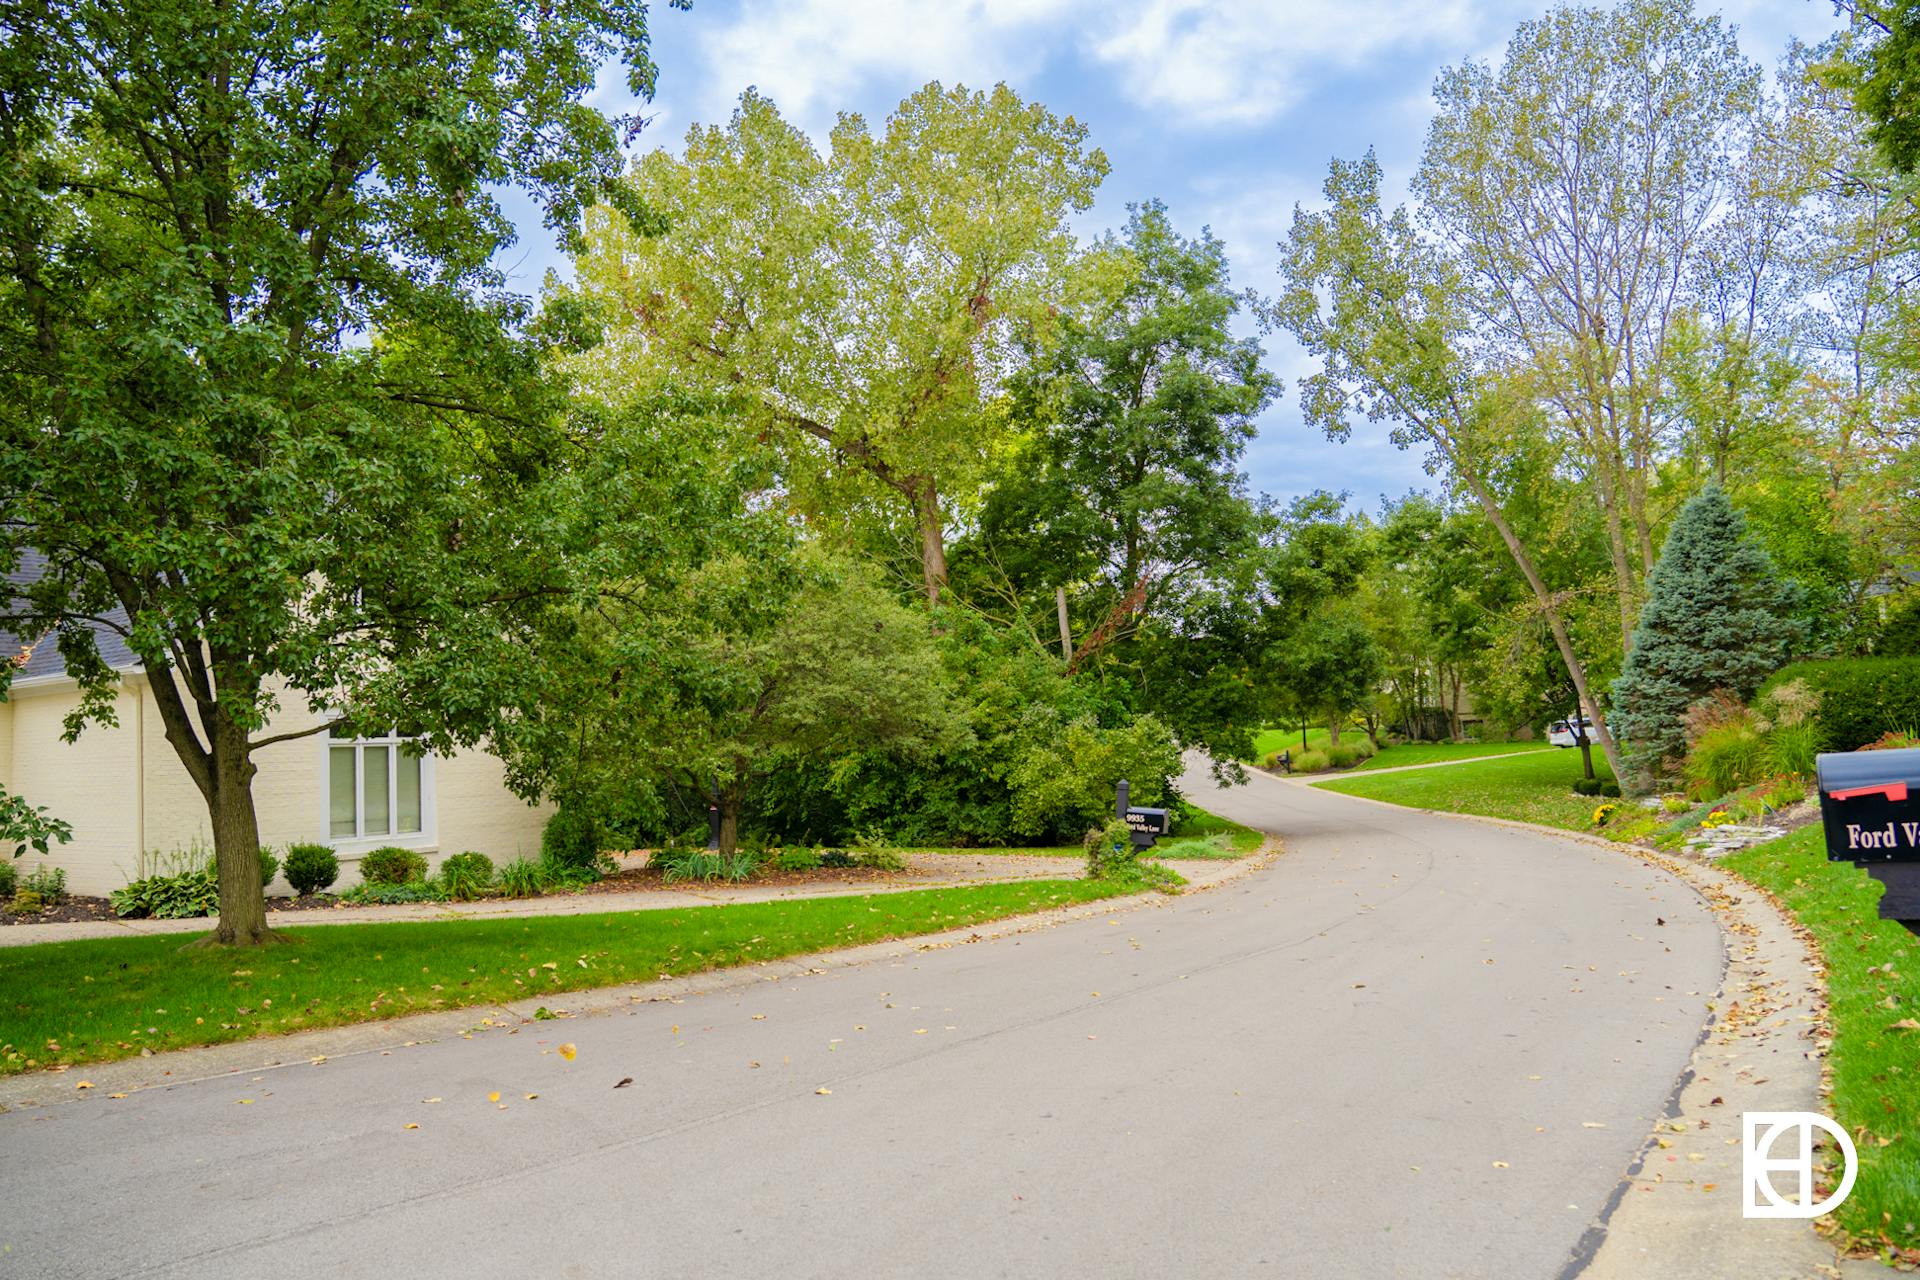 Photo of tree-lined street in Fox Hollow neighborhood in Zionsville, Indiana.